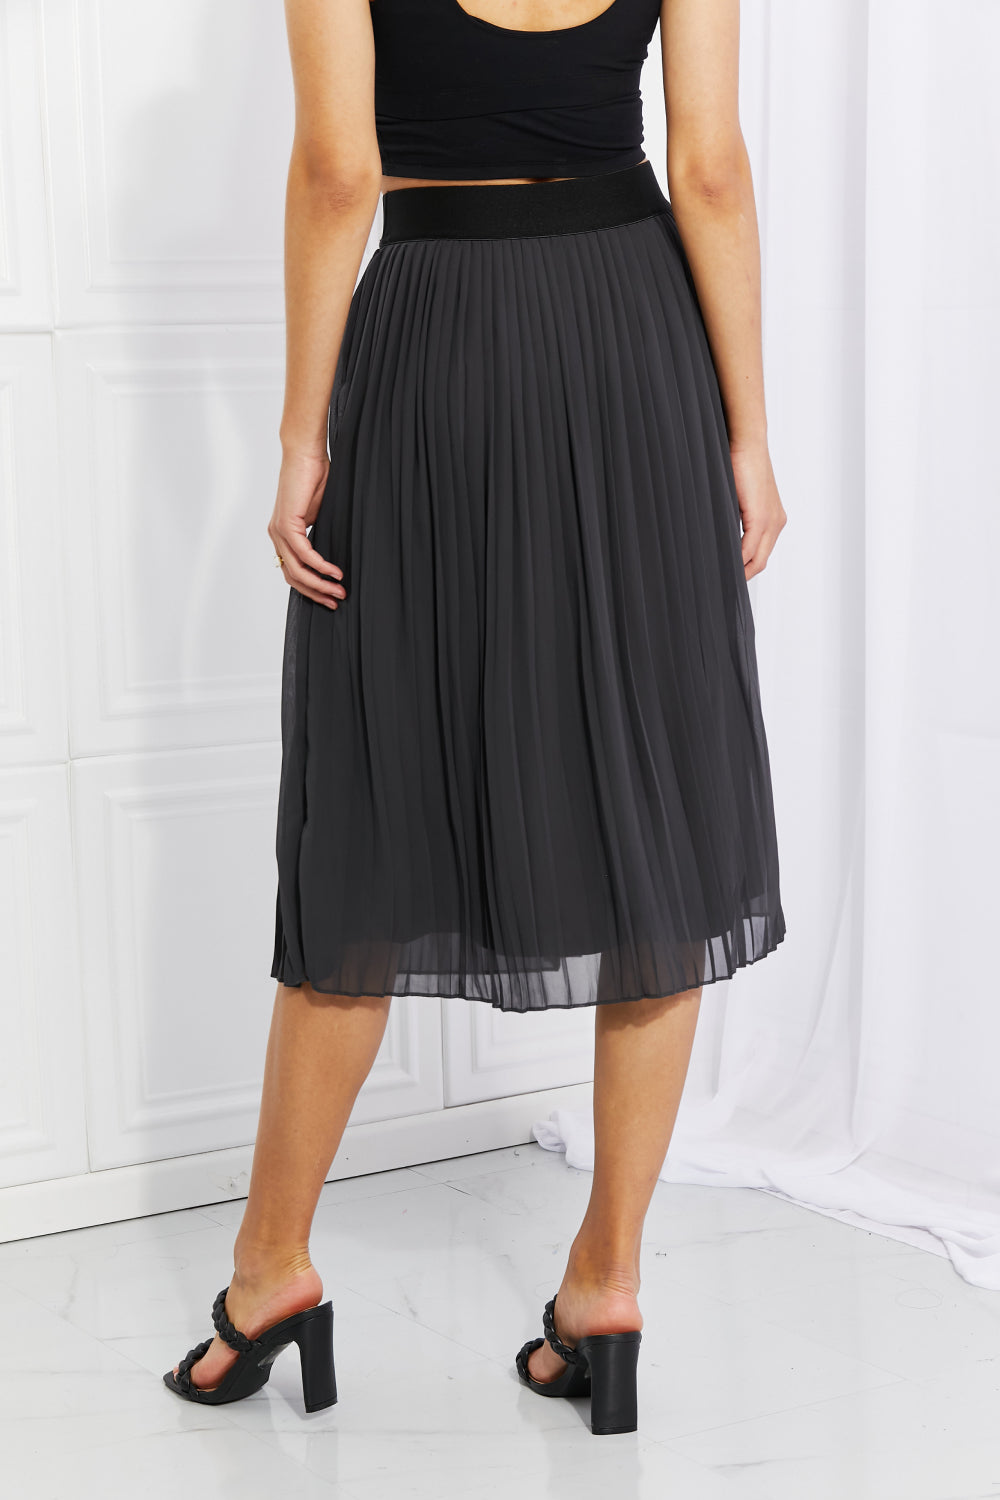 Zenana Full Size Romantic At Heart Pleated Chiffon Midi Skirt Posh Styles Apparel